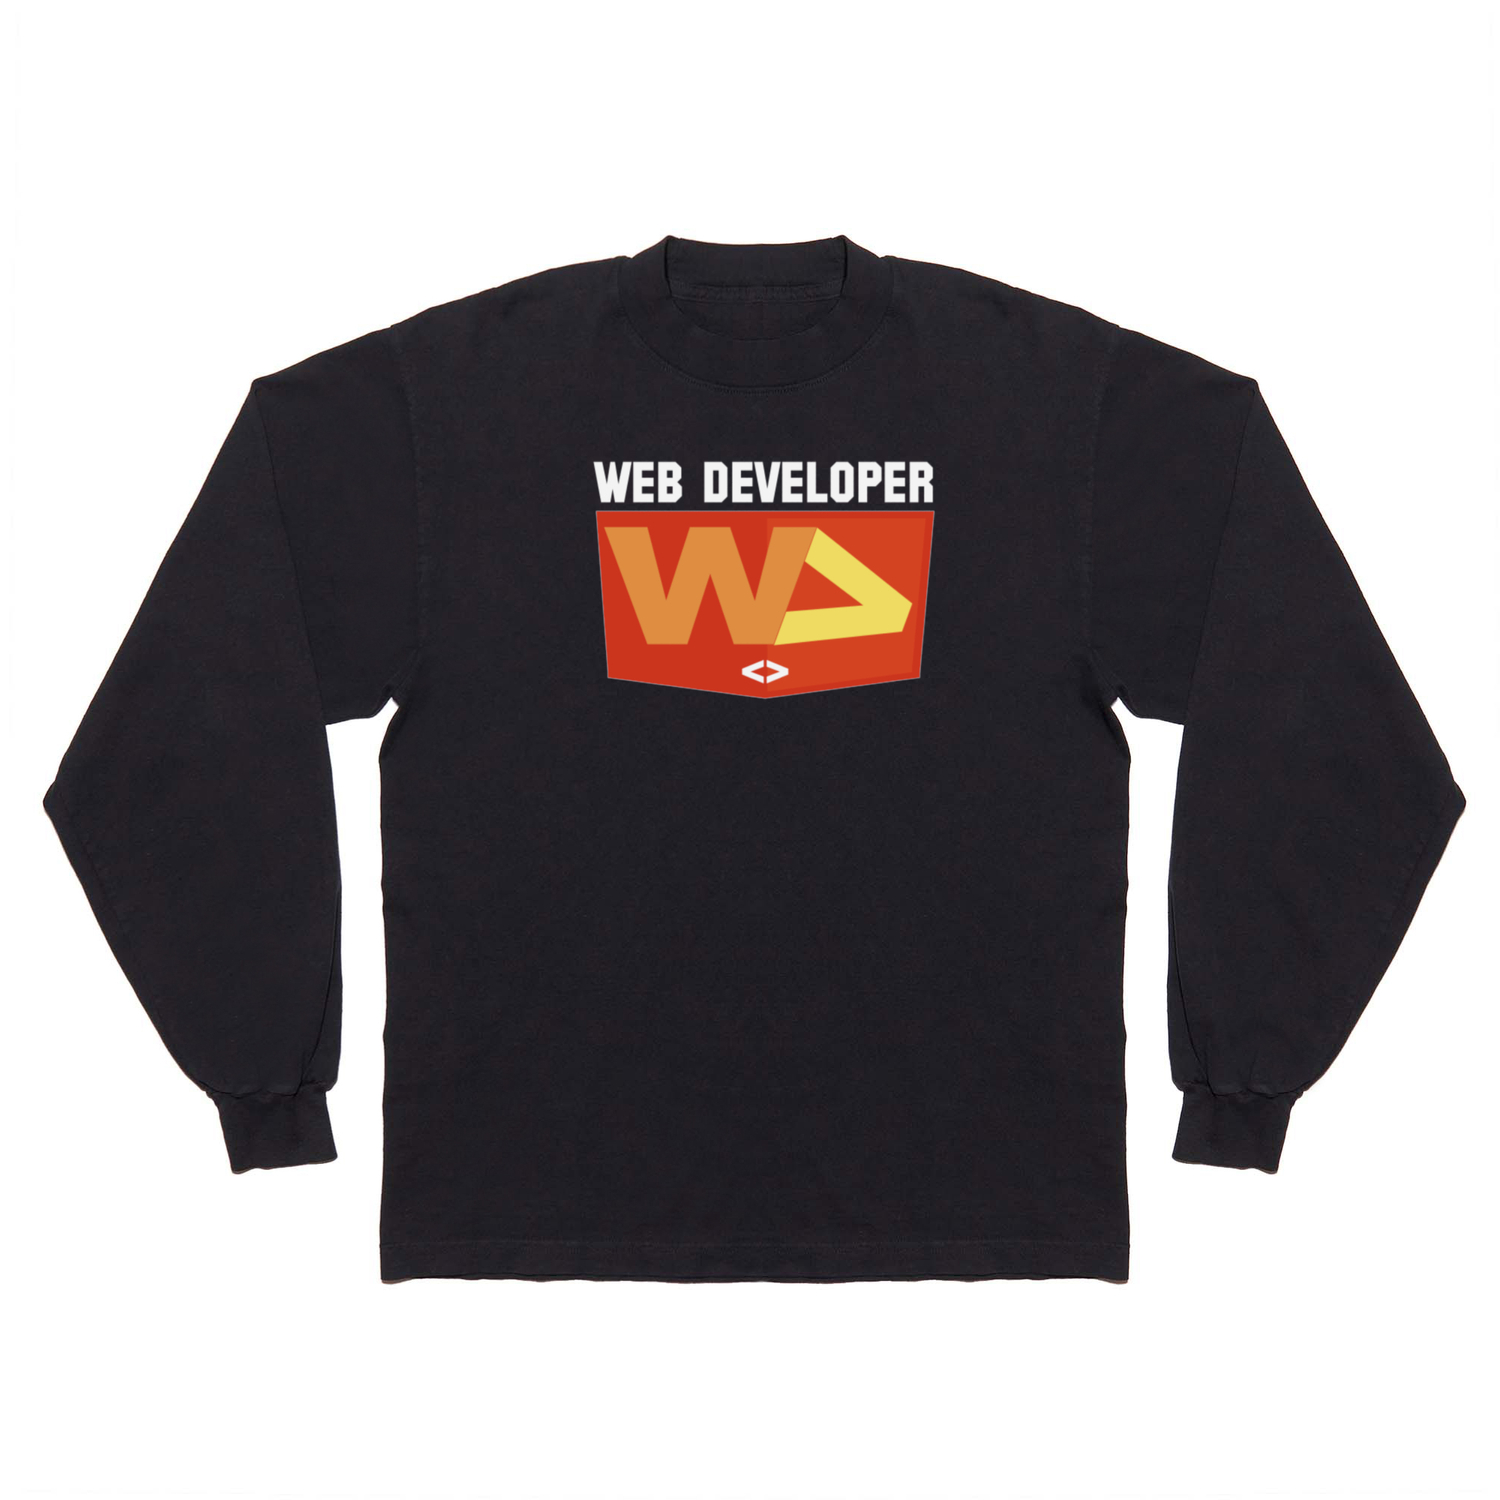 Web developer Long Sleeve T by dmcloth | Society6